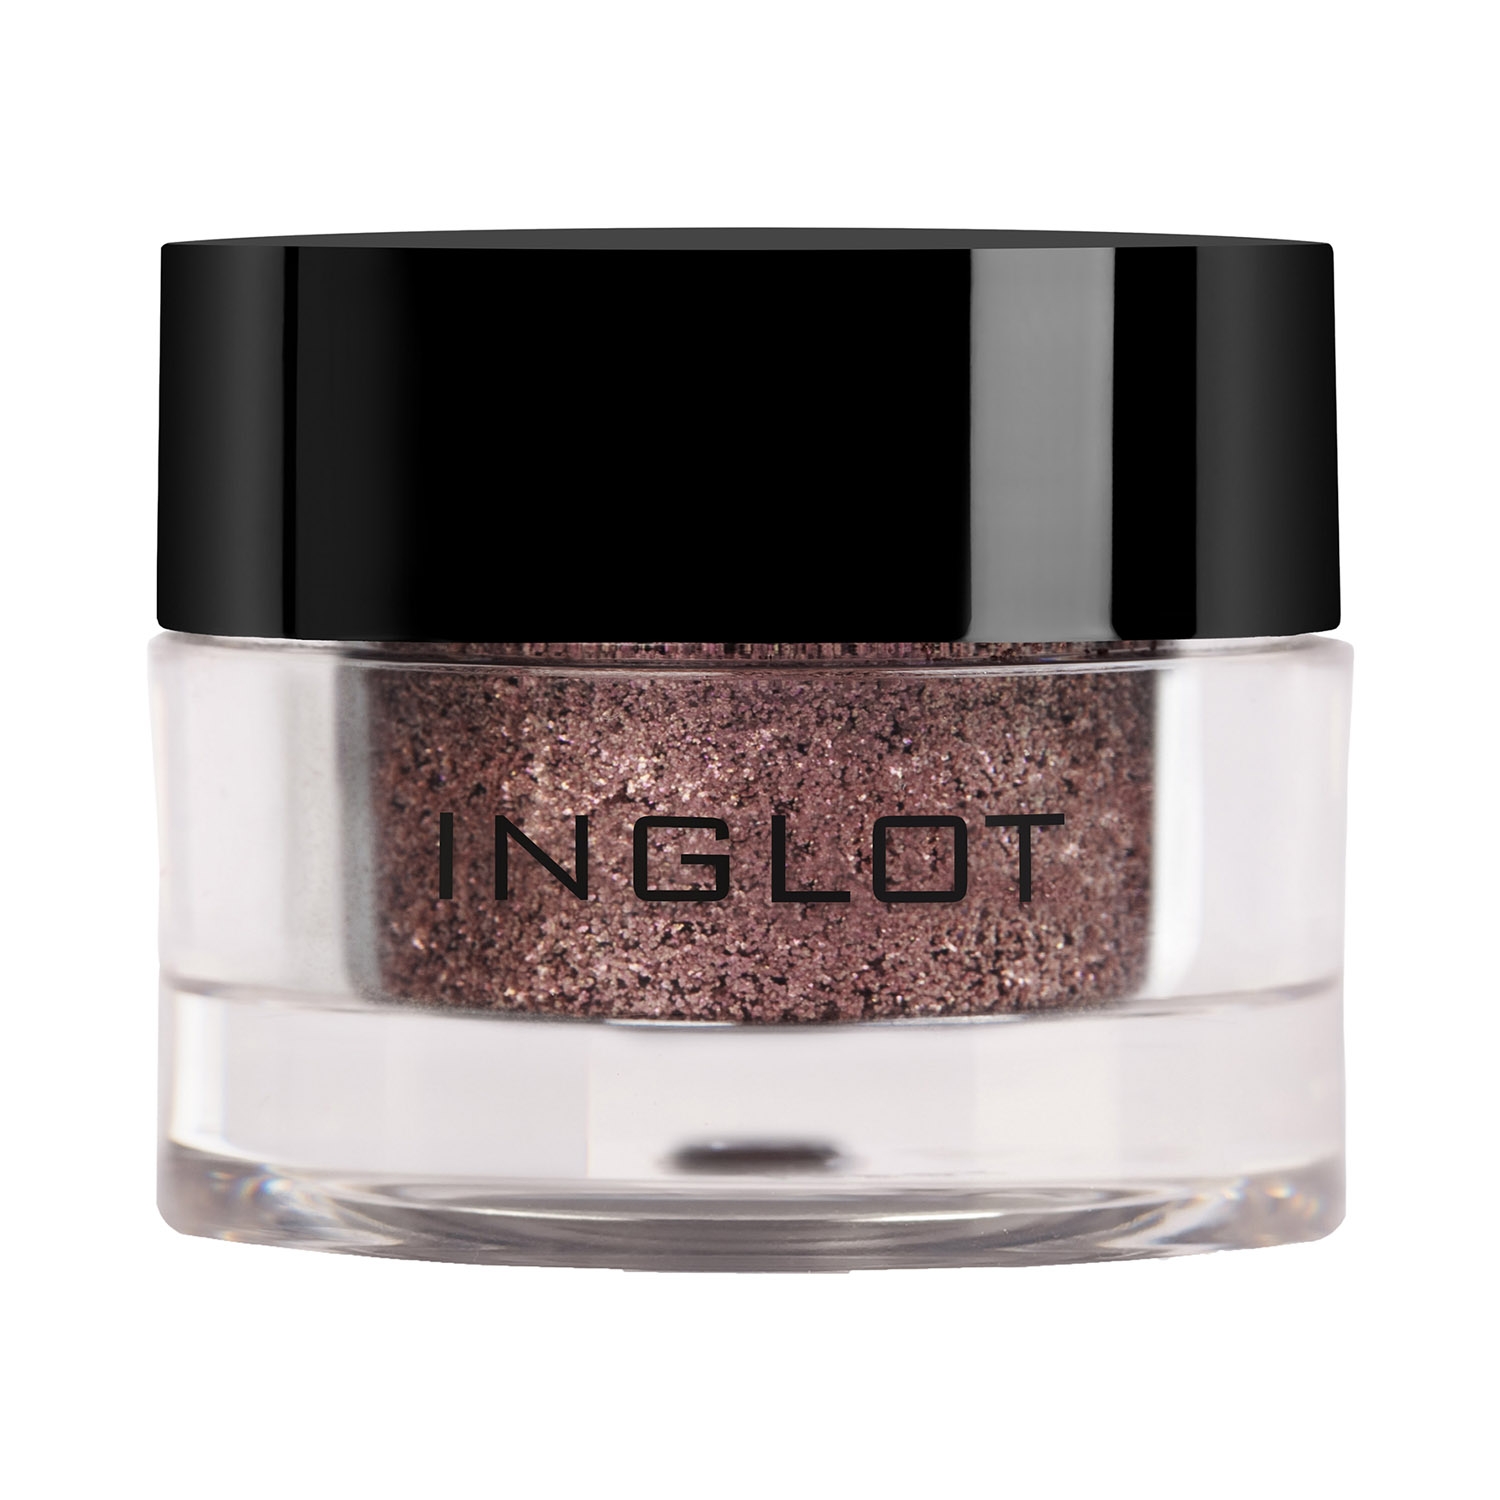 INGLOT | INGLOT Amc Pure Pigment Eye Shadow - 124 Shade (2g)